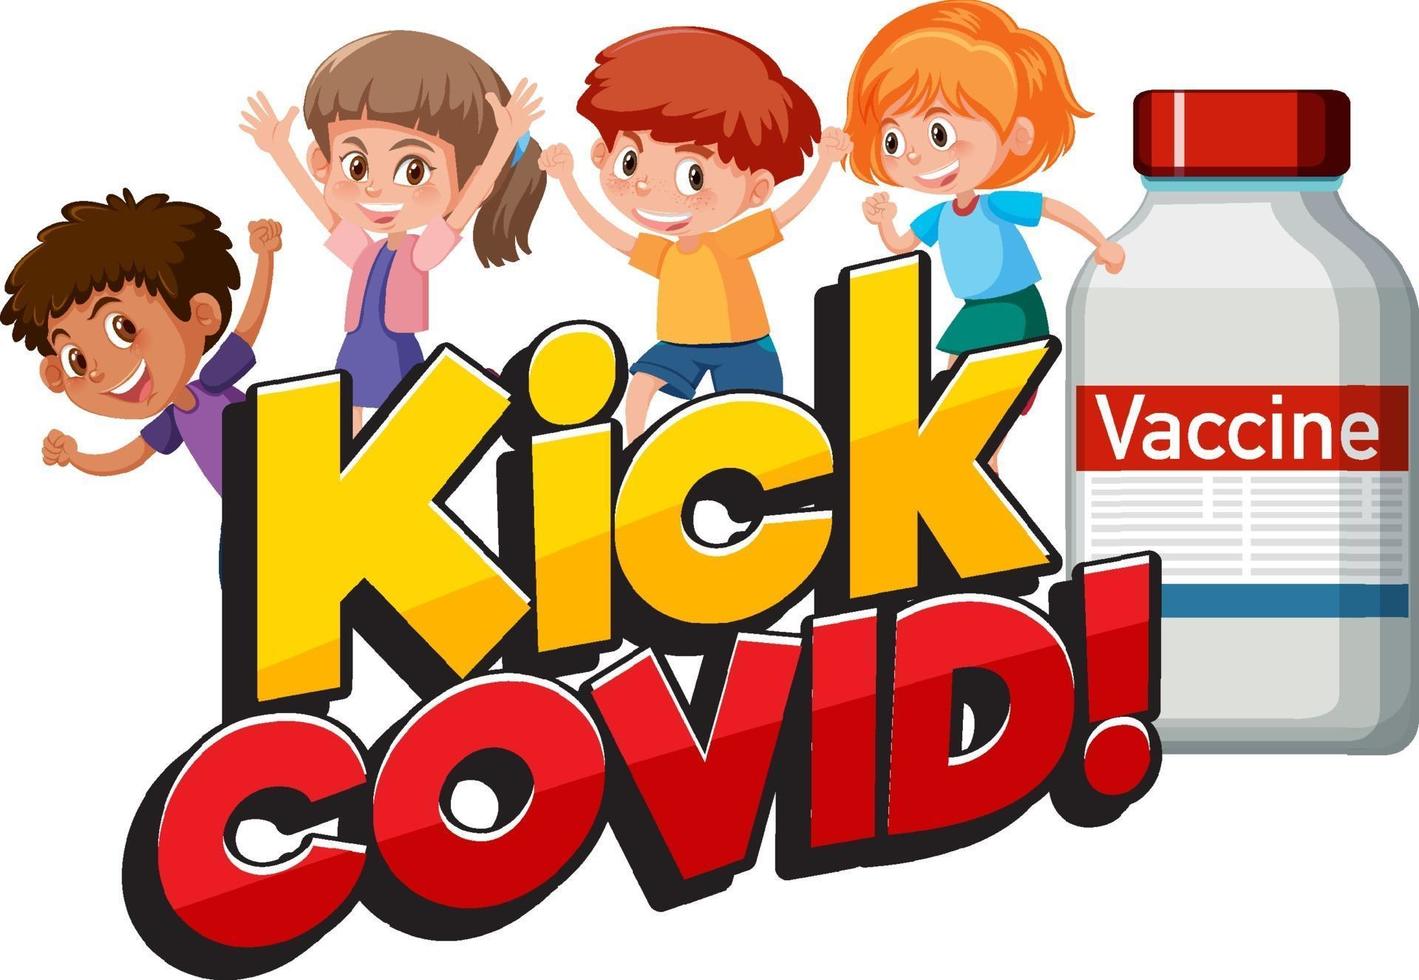 Kick Covid font with many children cartoon character vector